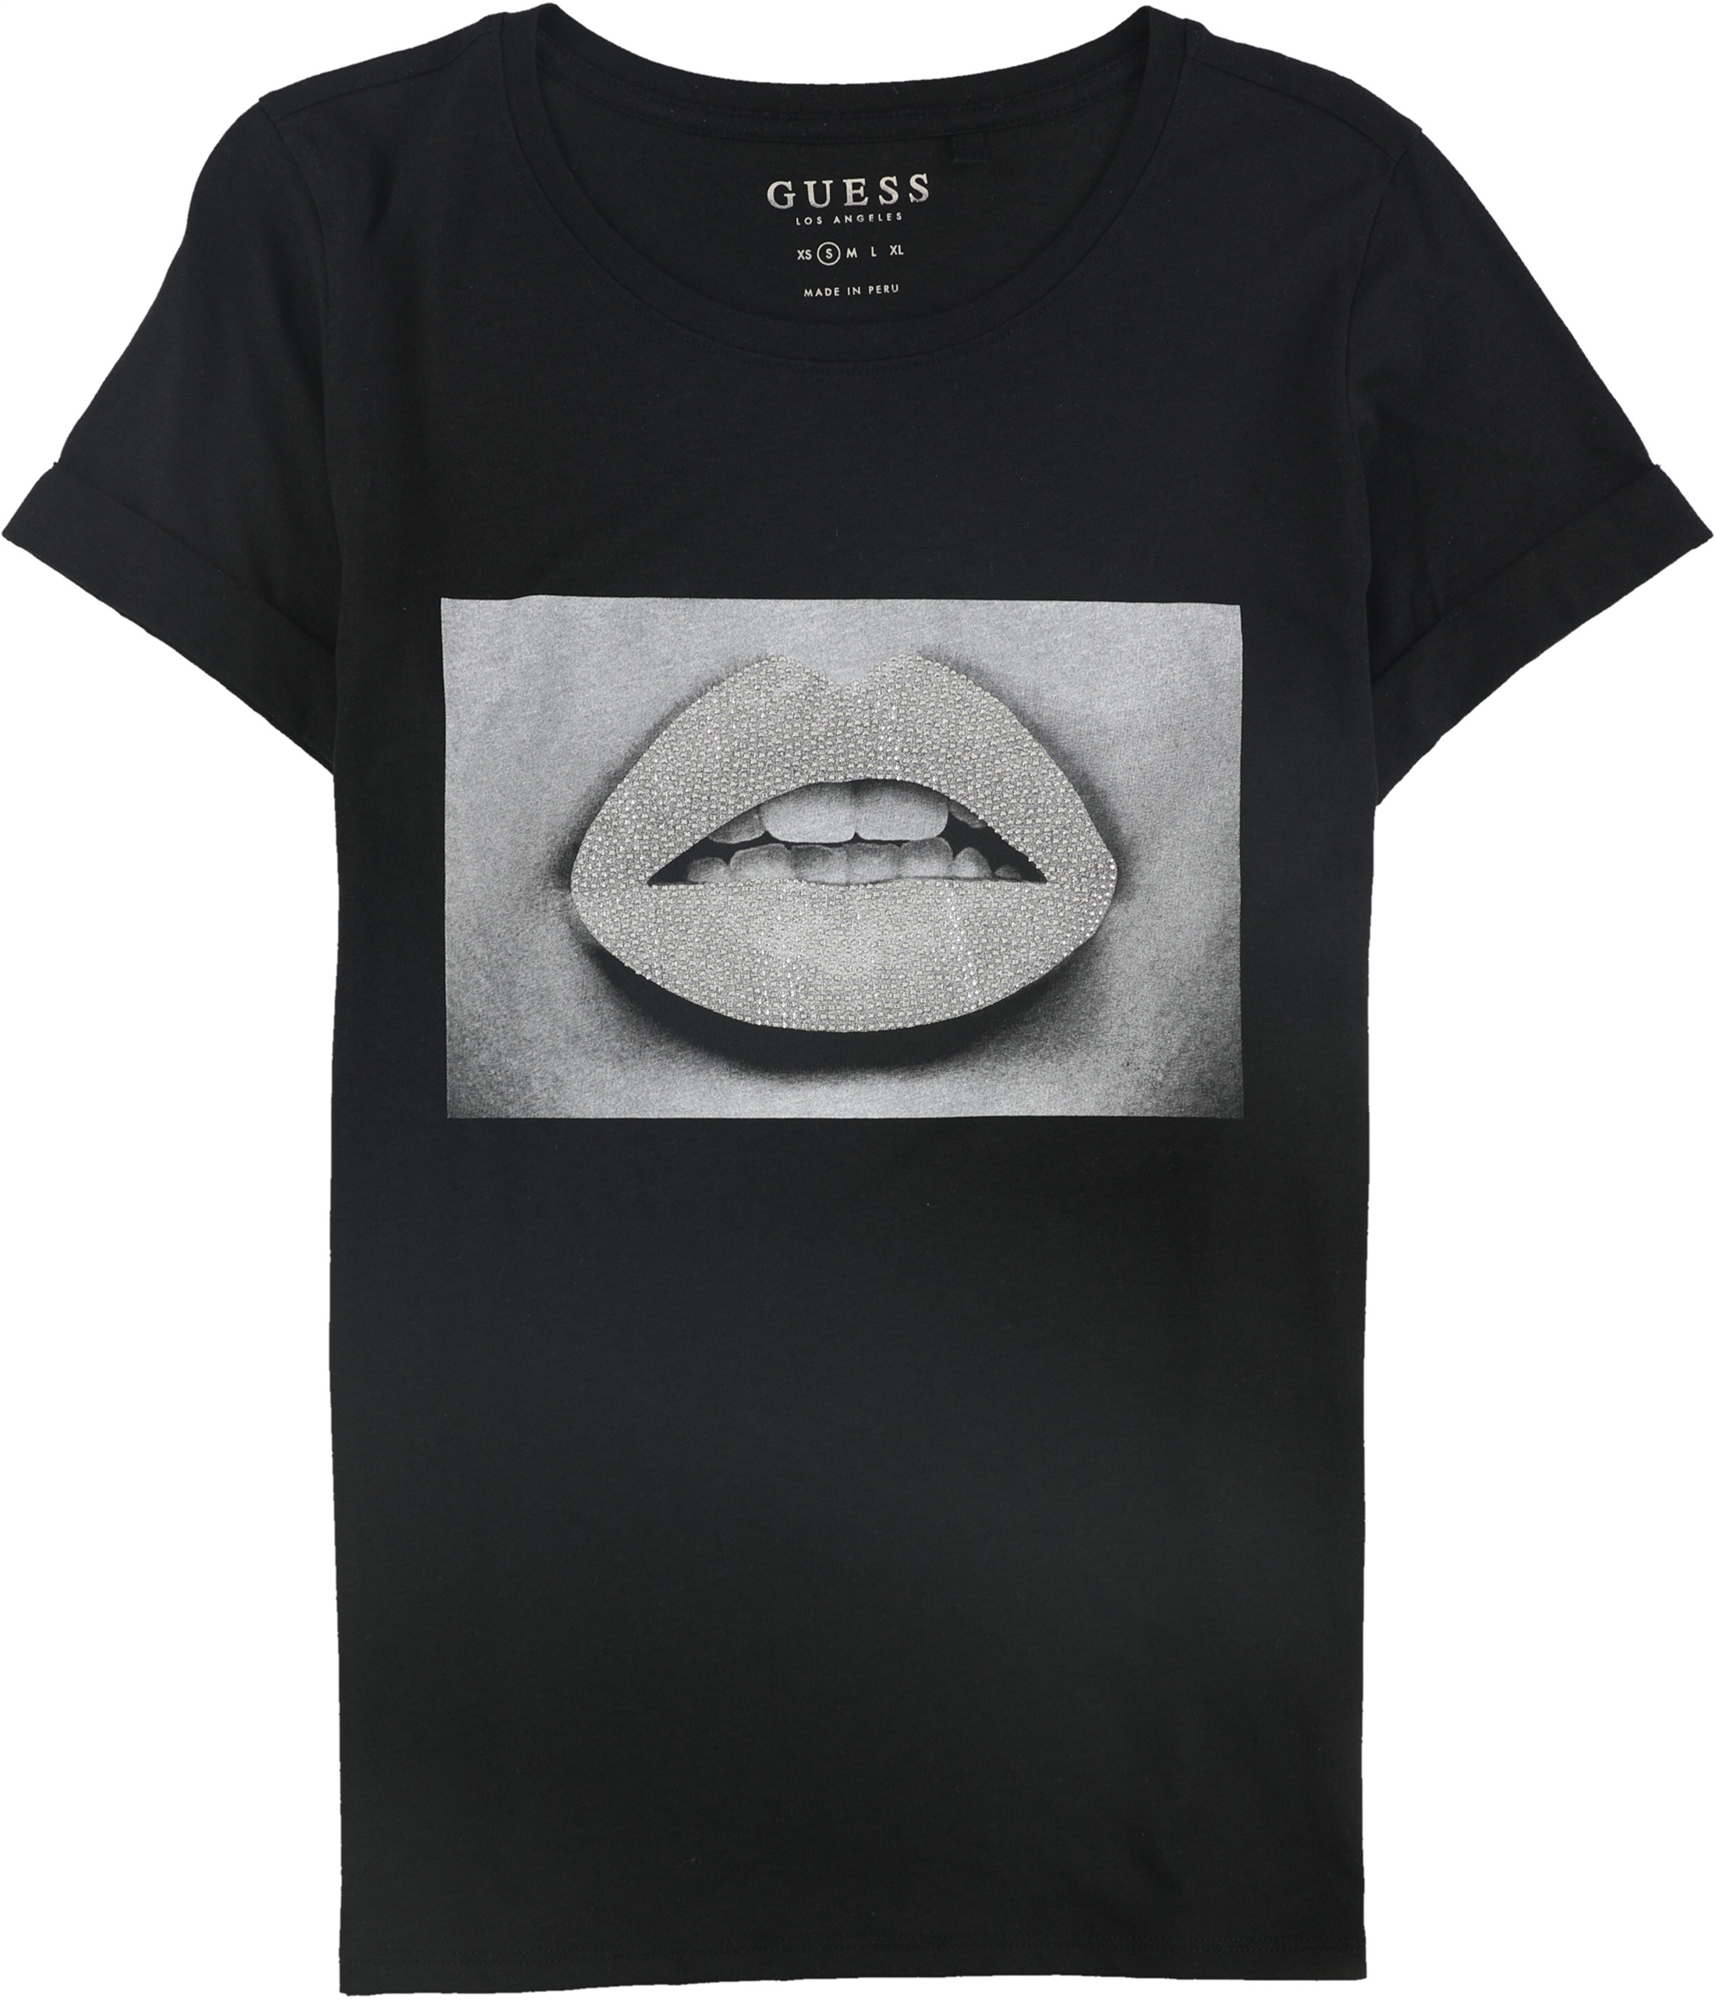 GUESS Womens Lip Embellished T-Shirt, Black, Small 191338829835 | eBay